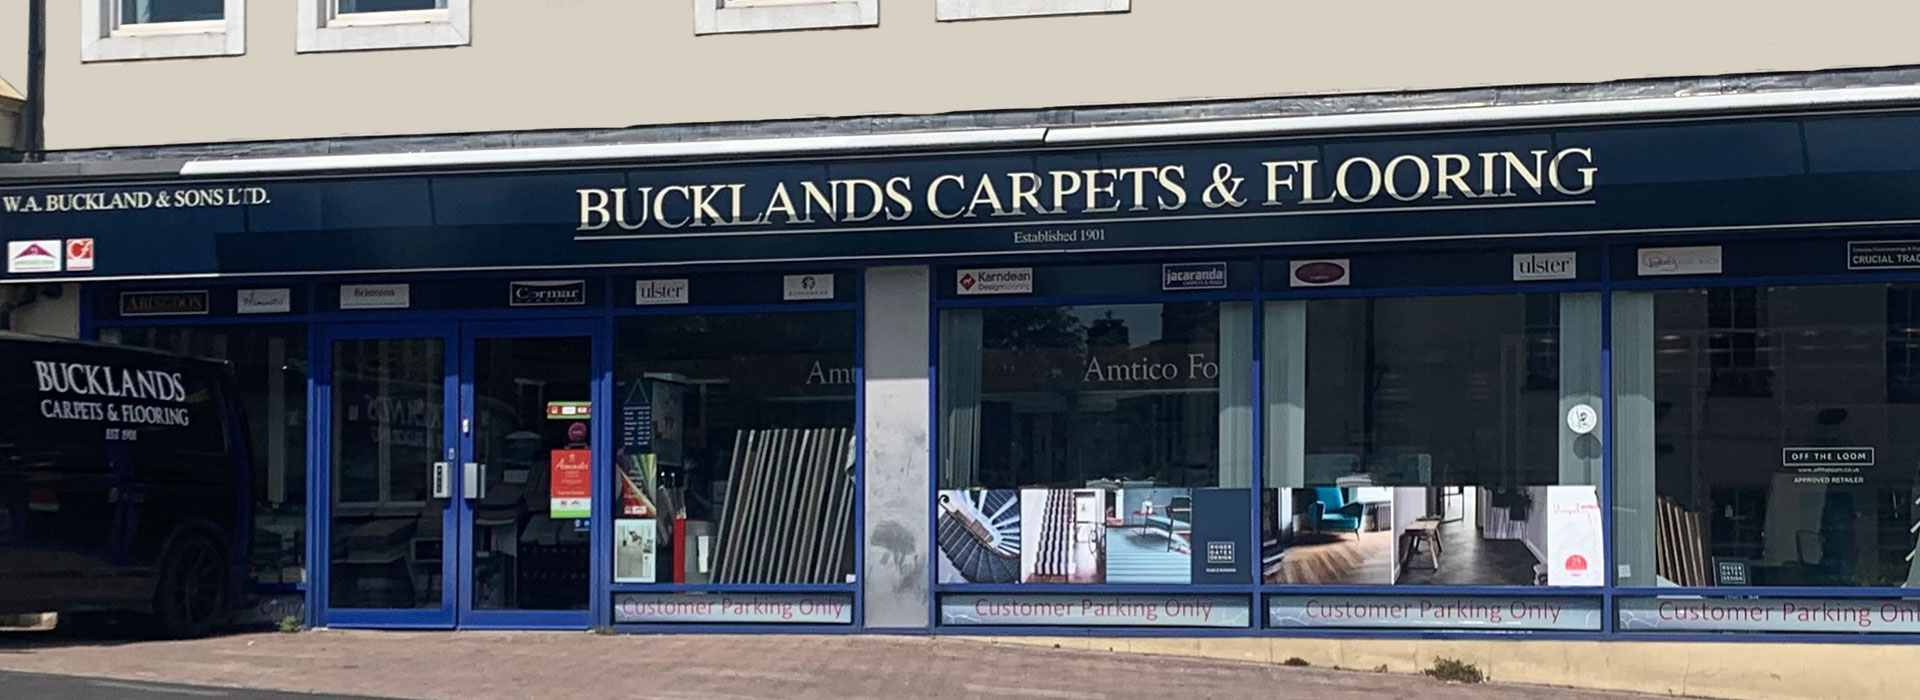 bucklands carpets